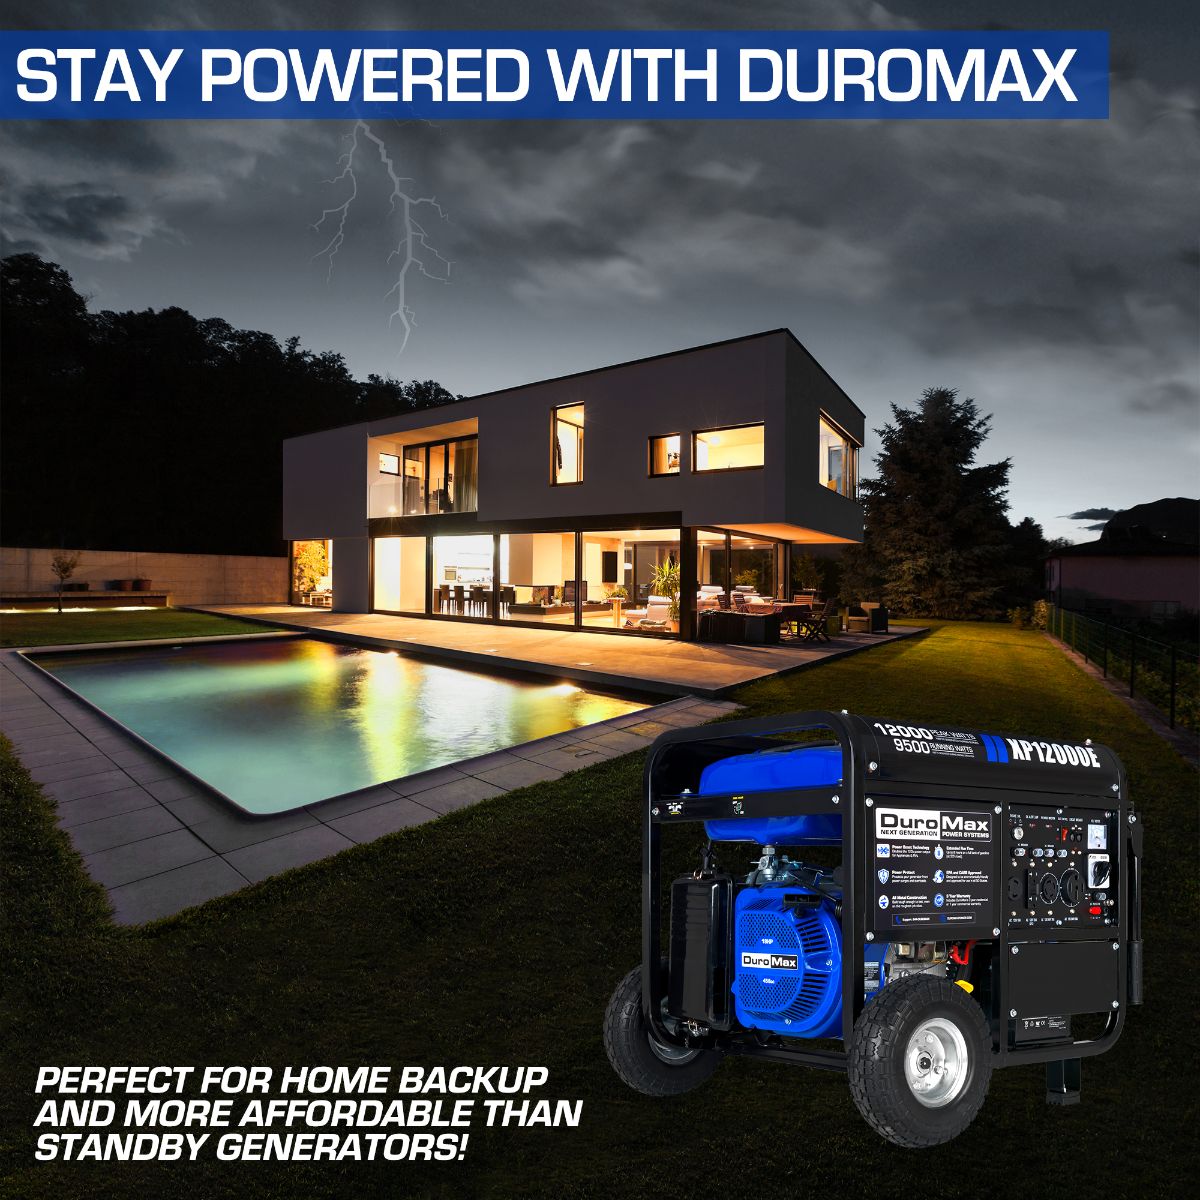 DuroMax  12,000 Watt Gasoline Portable Generator